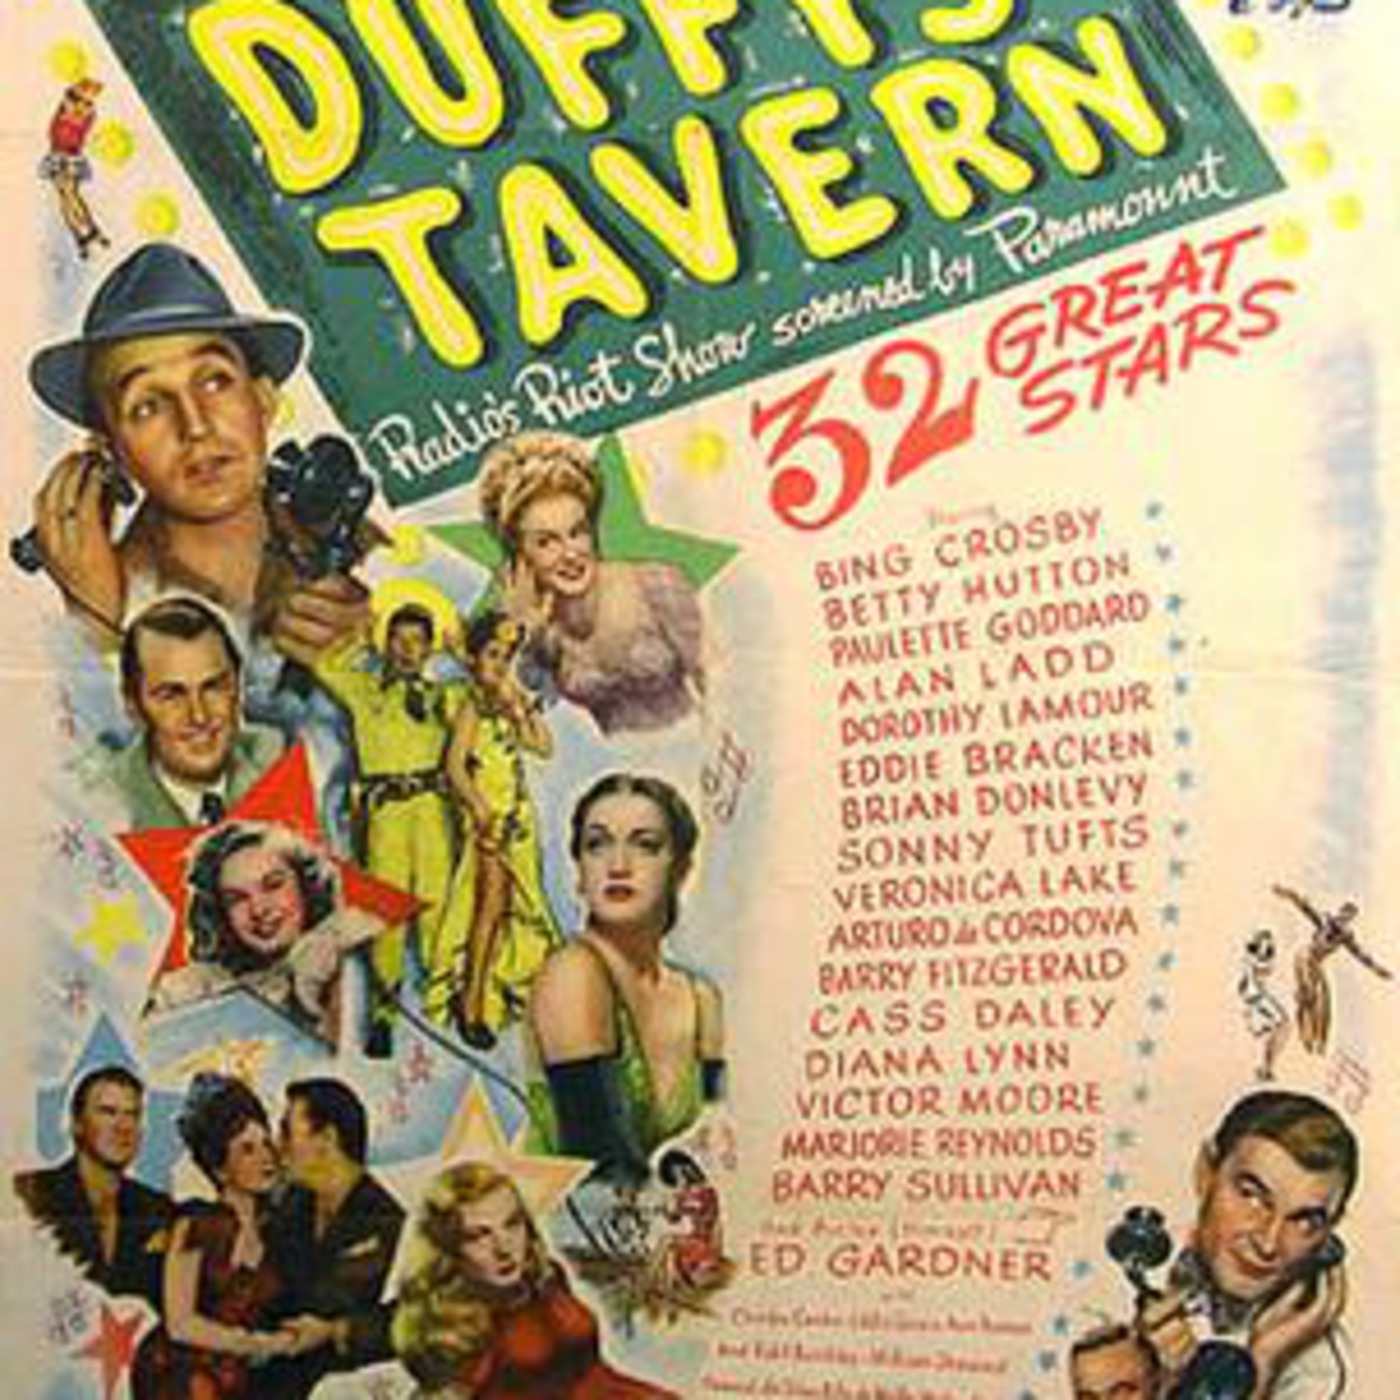 Duffs Tavern -44--03-07 Radio Americas Monday Edition